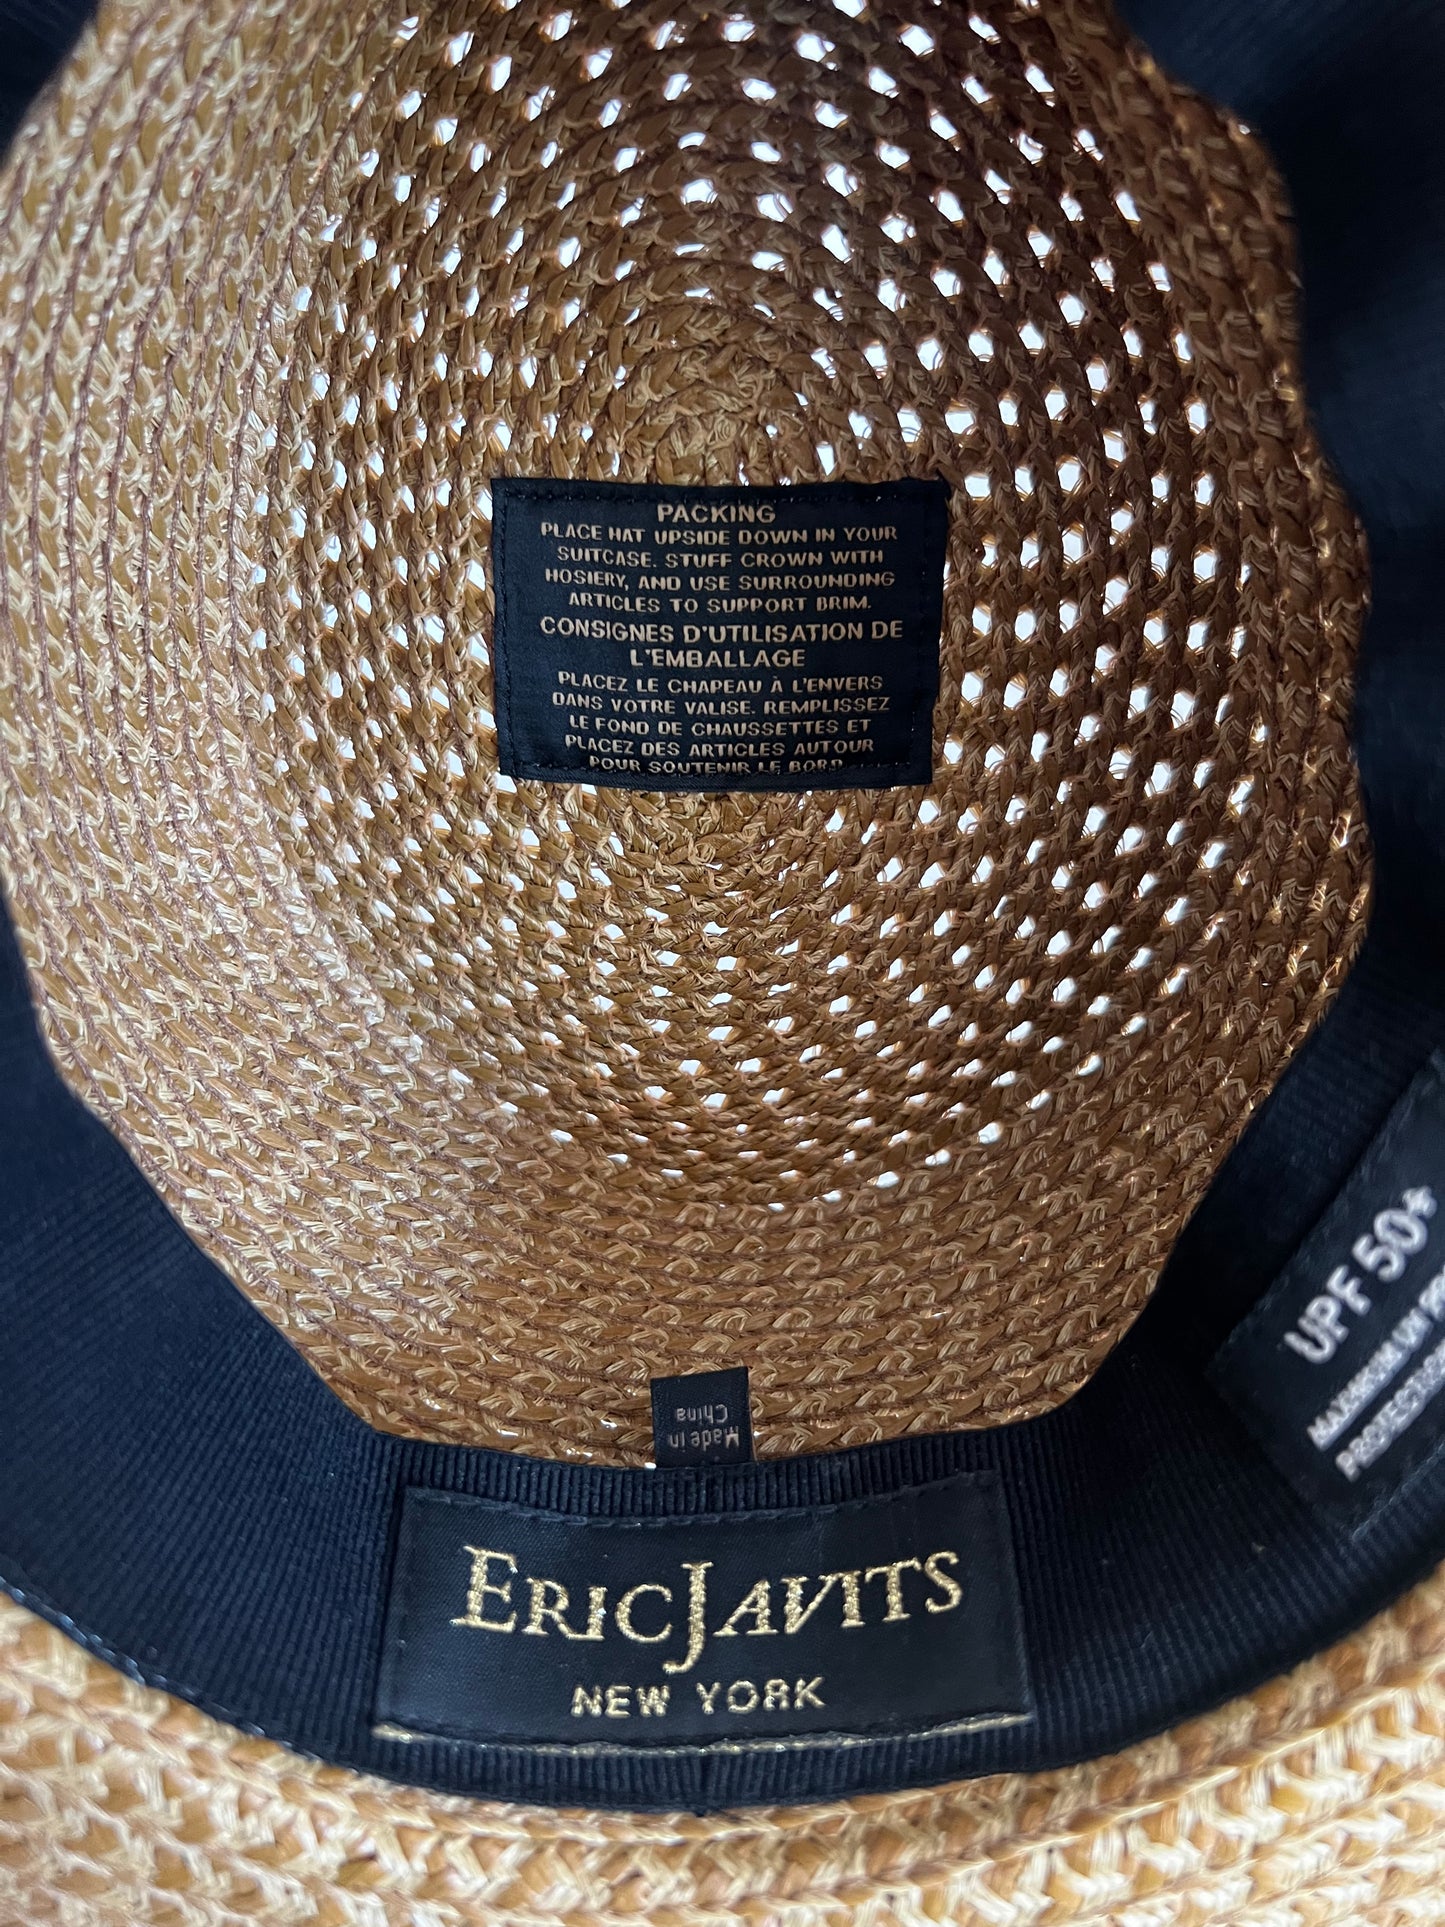 Eric Javits “Cannes” Straw Hat